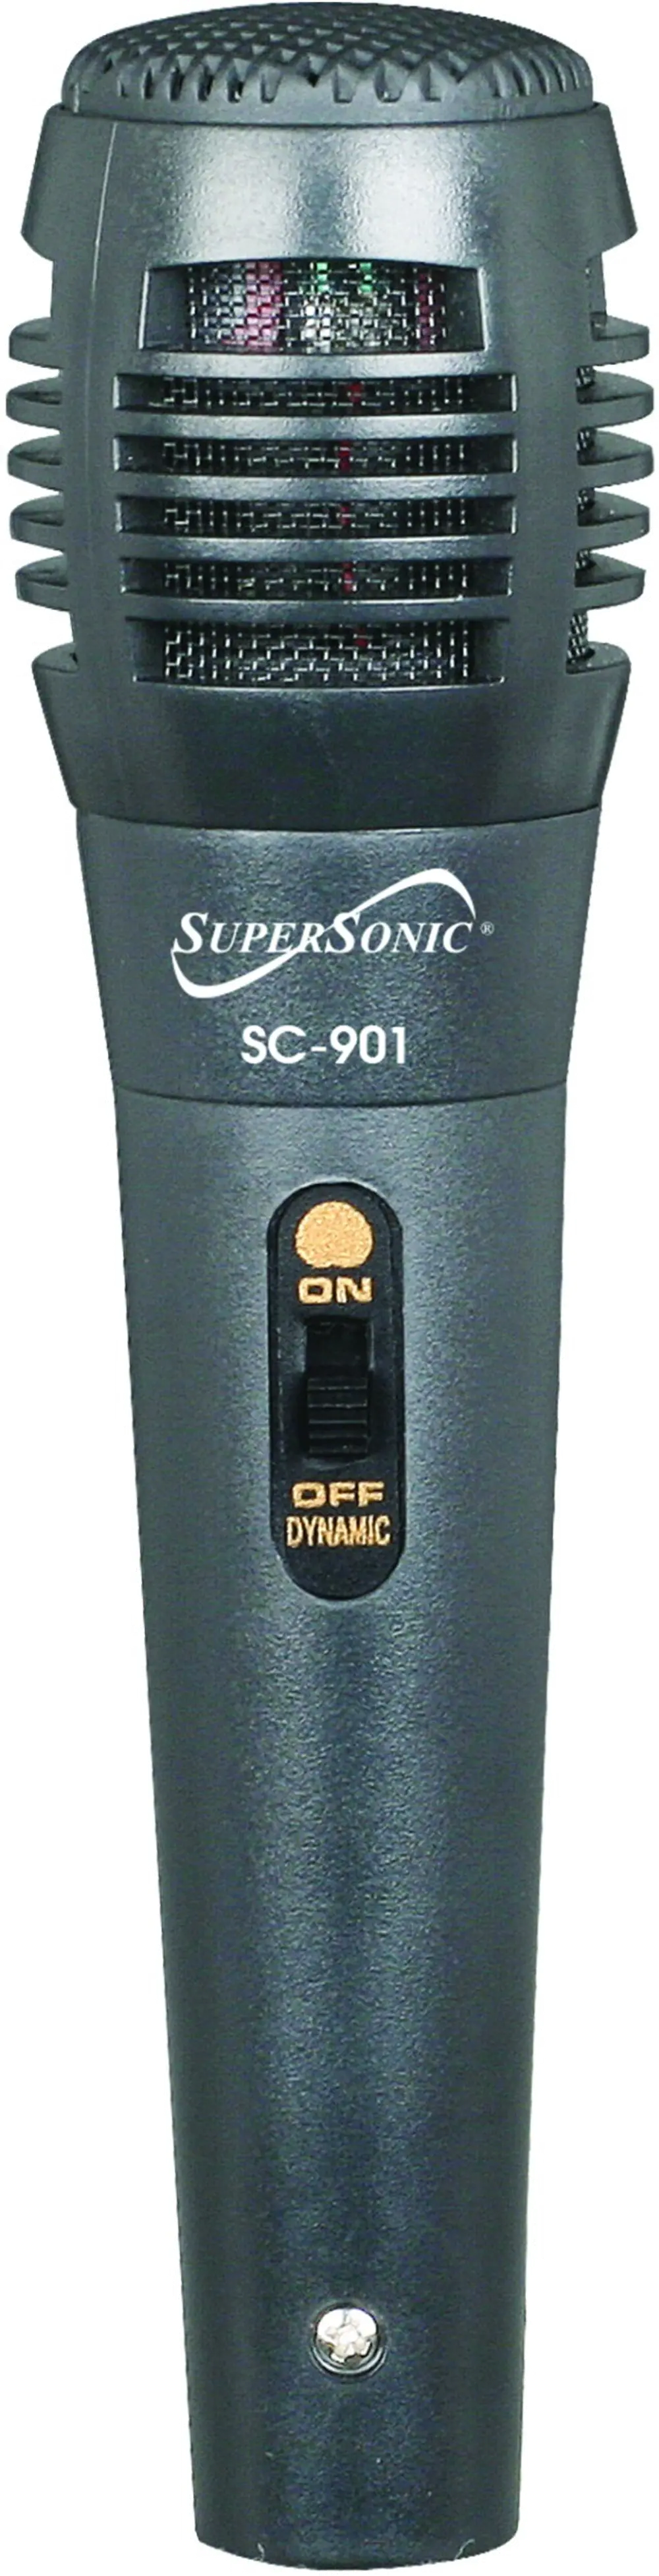 SC-901 MICORPHONE Supersonic SC-901 Professional Microphone-1